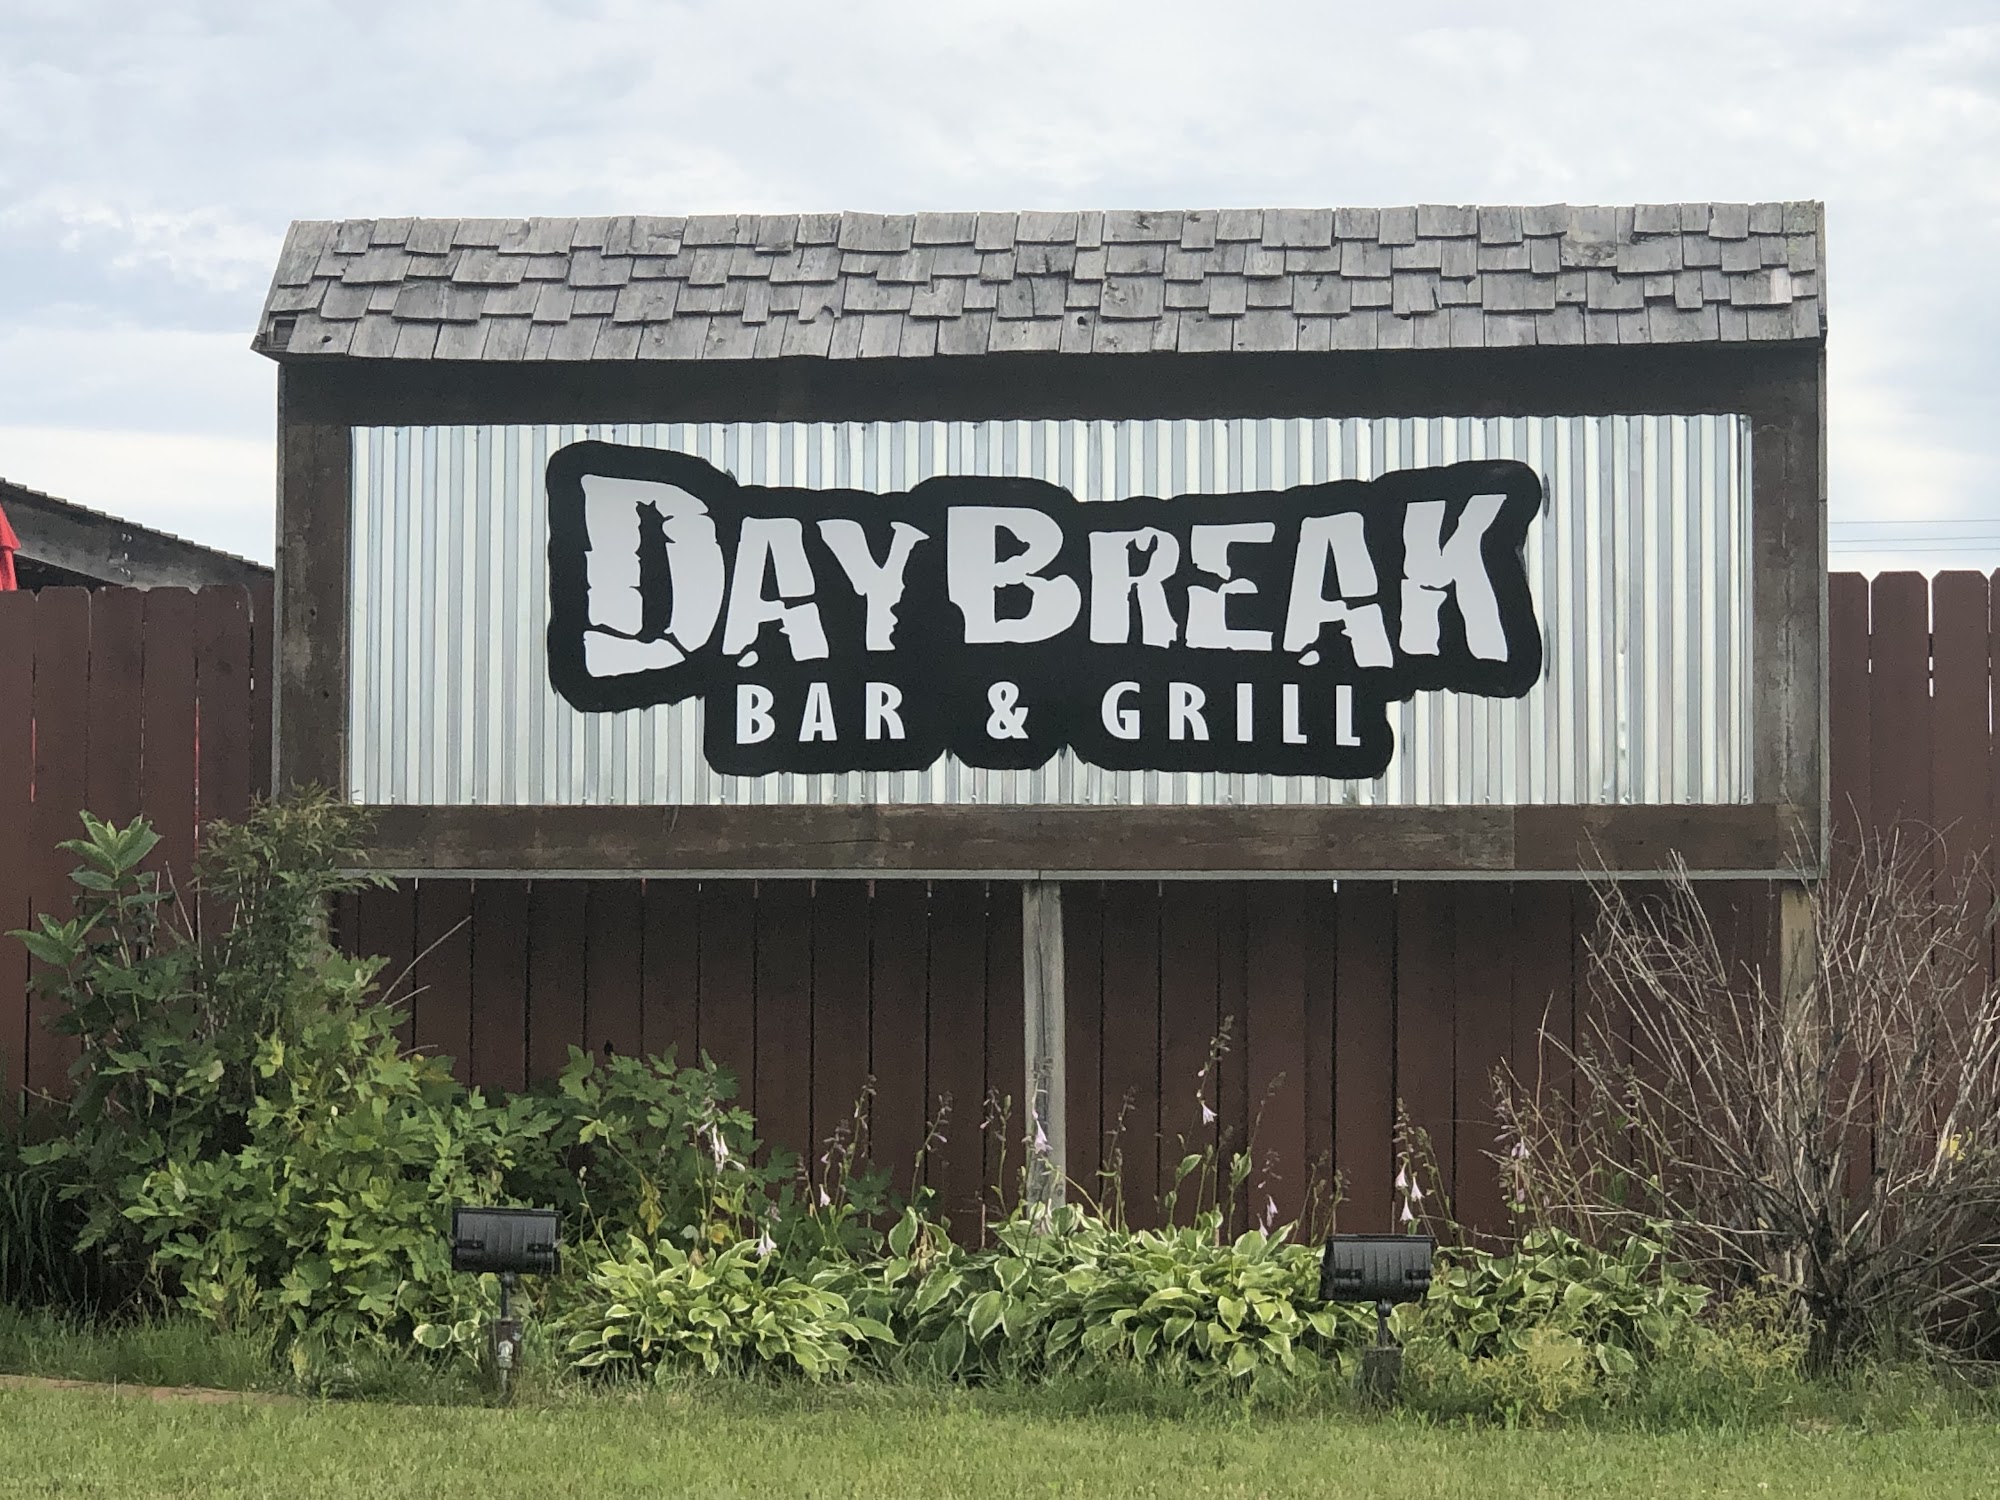 Day break Bar & Grill